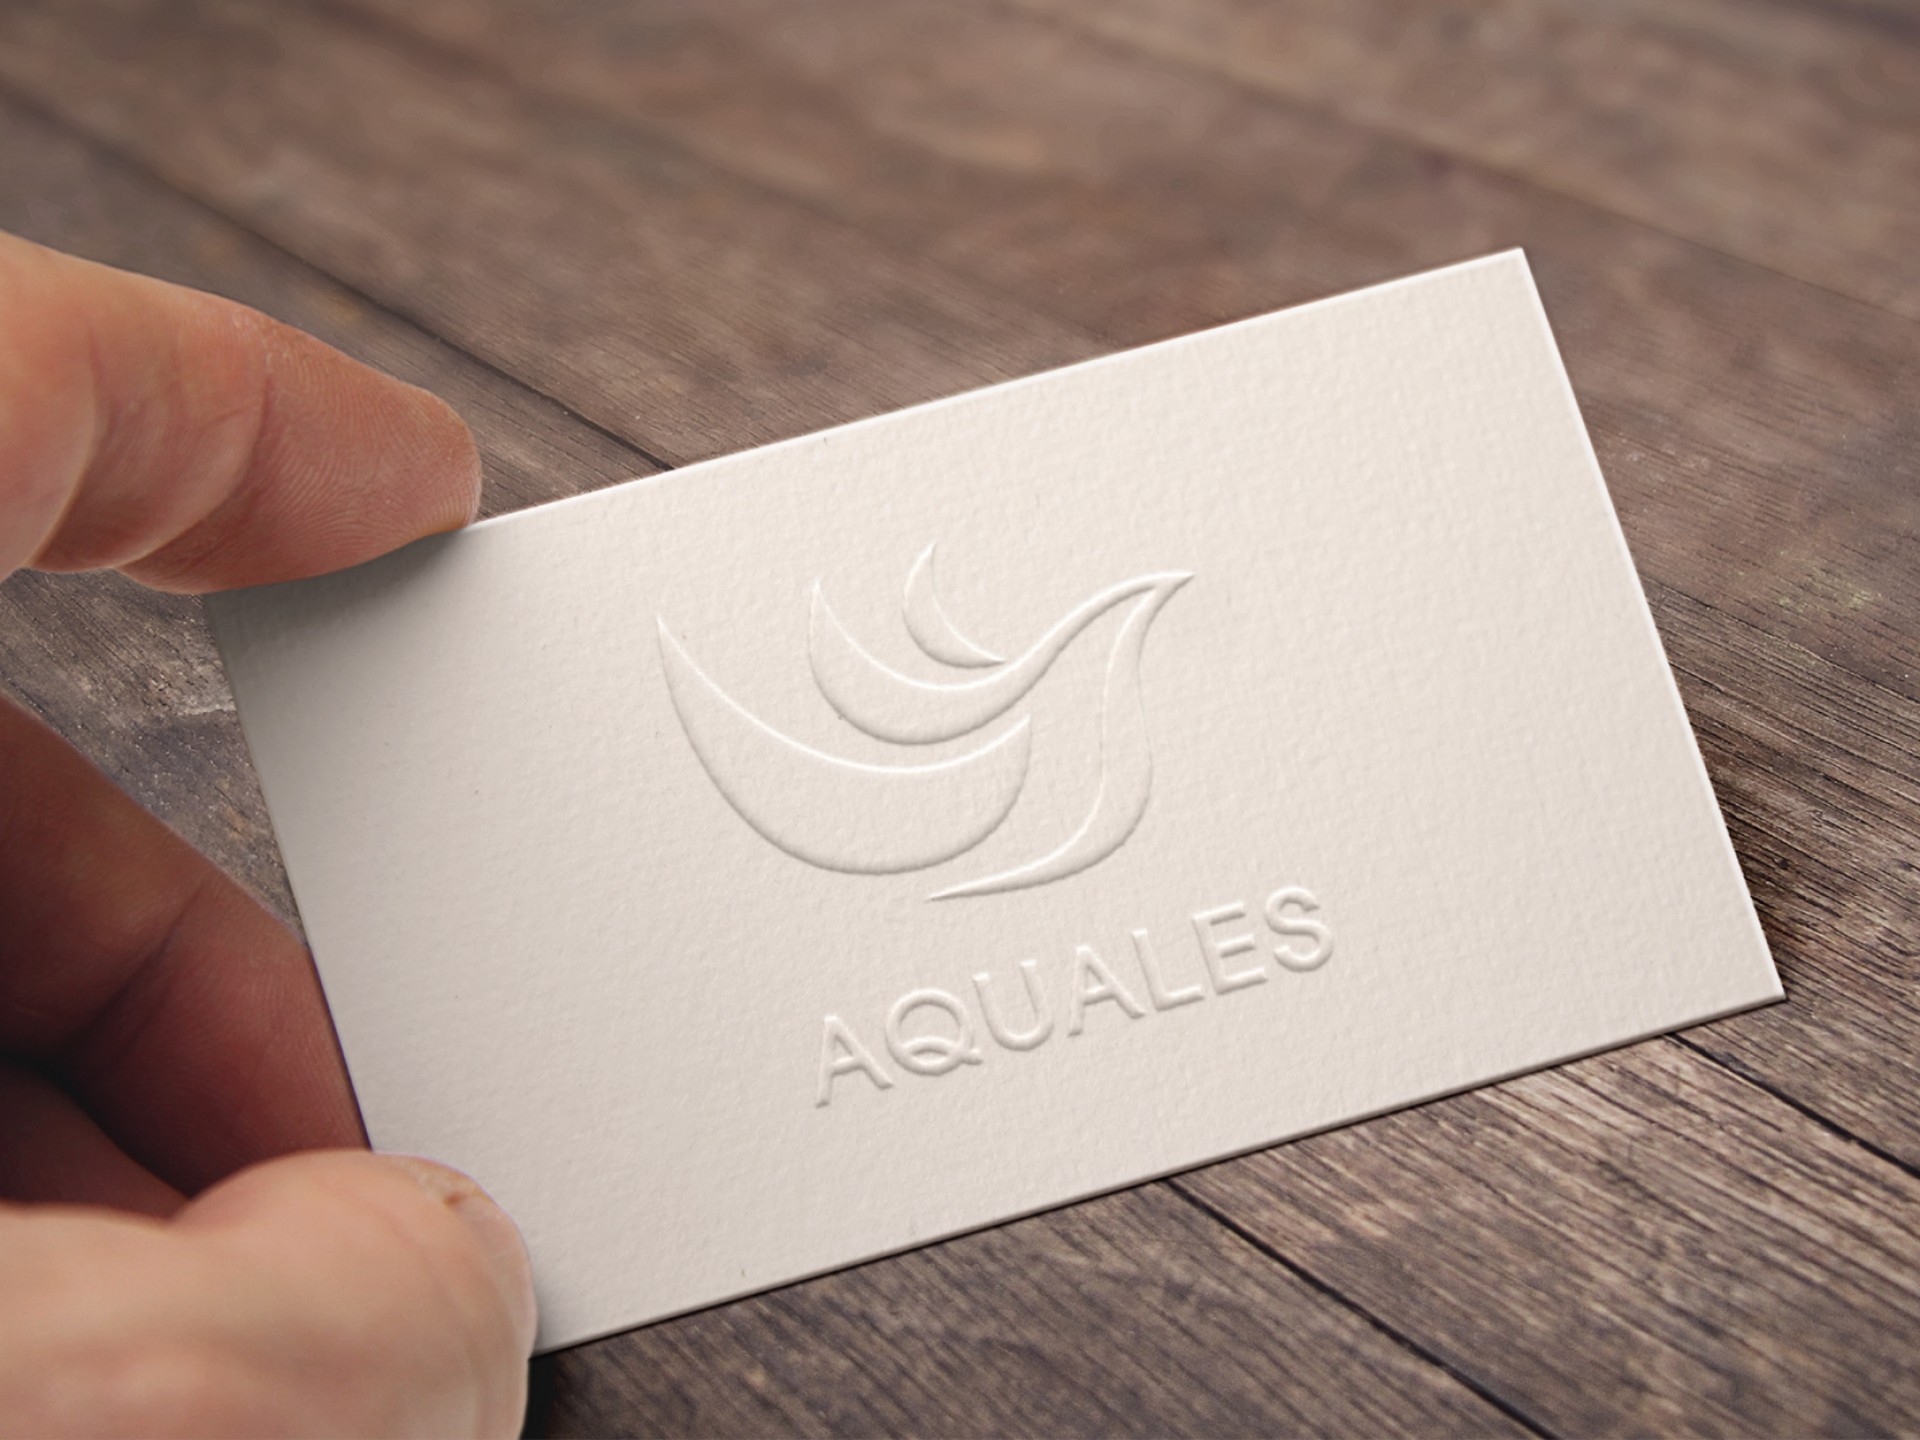 Aquales Logo Design